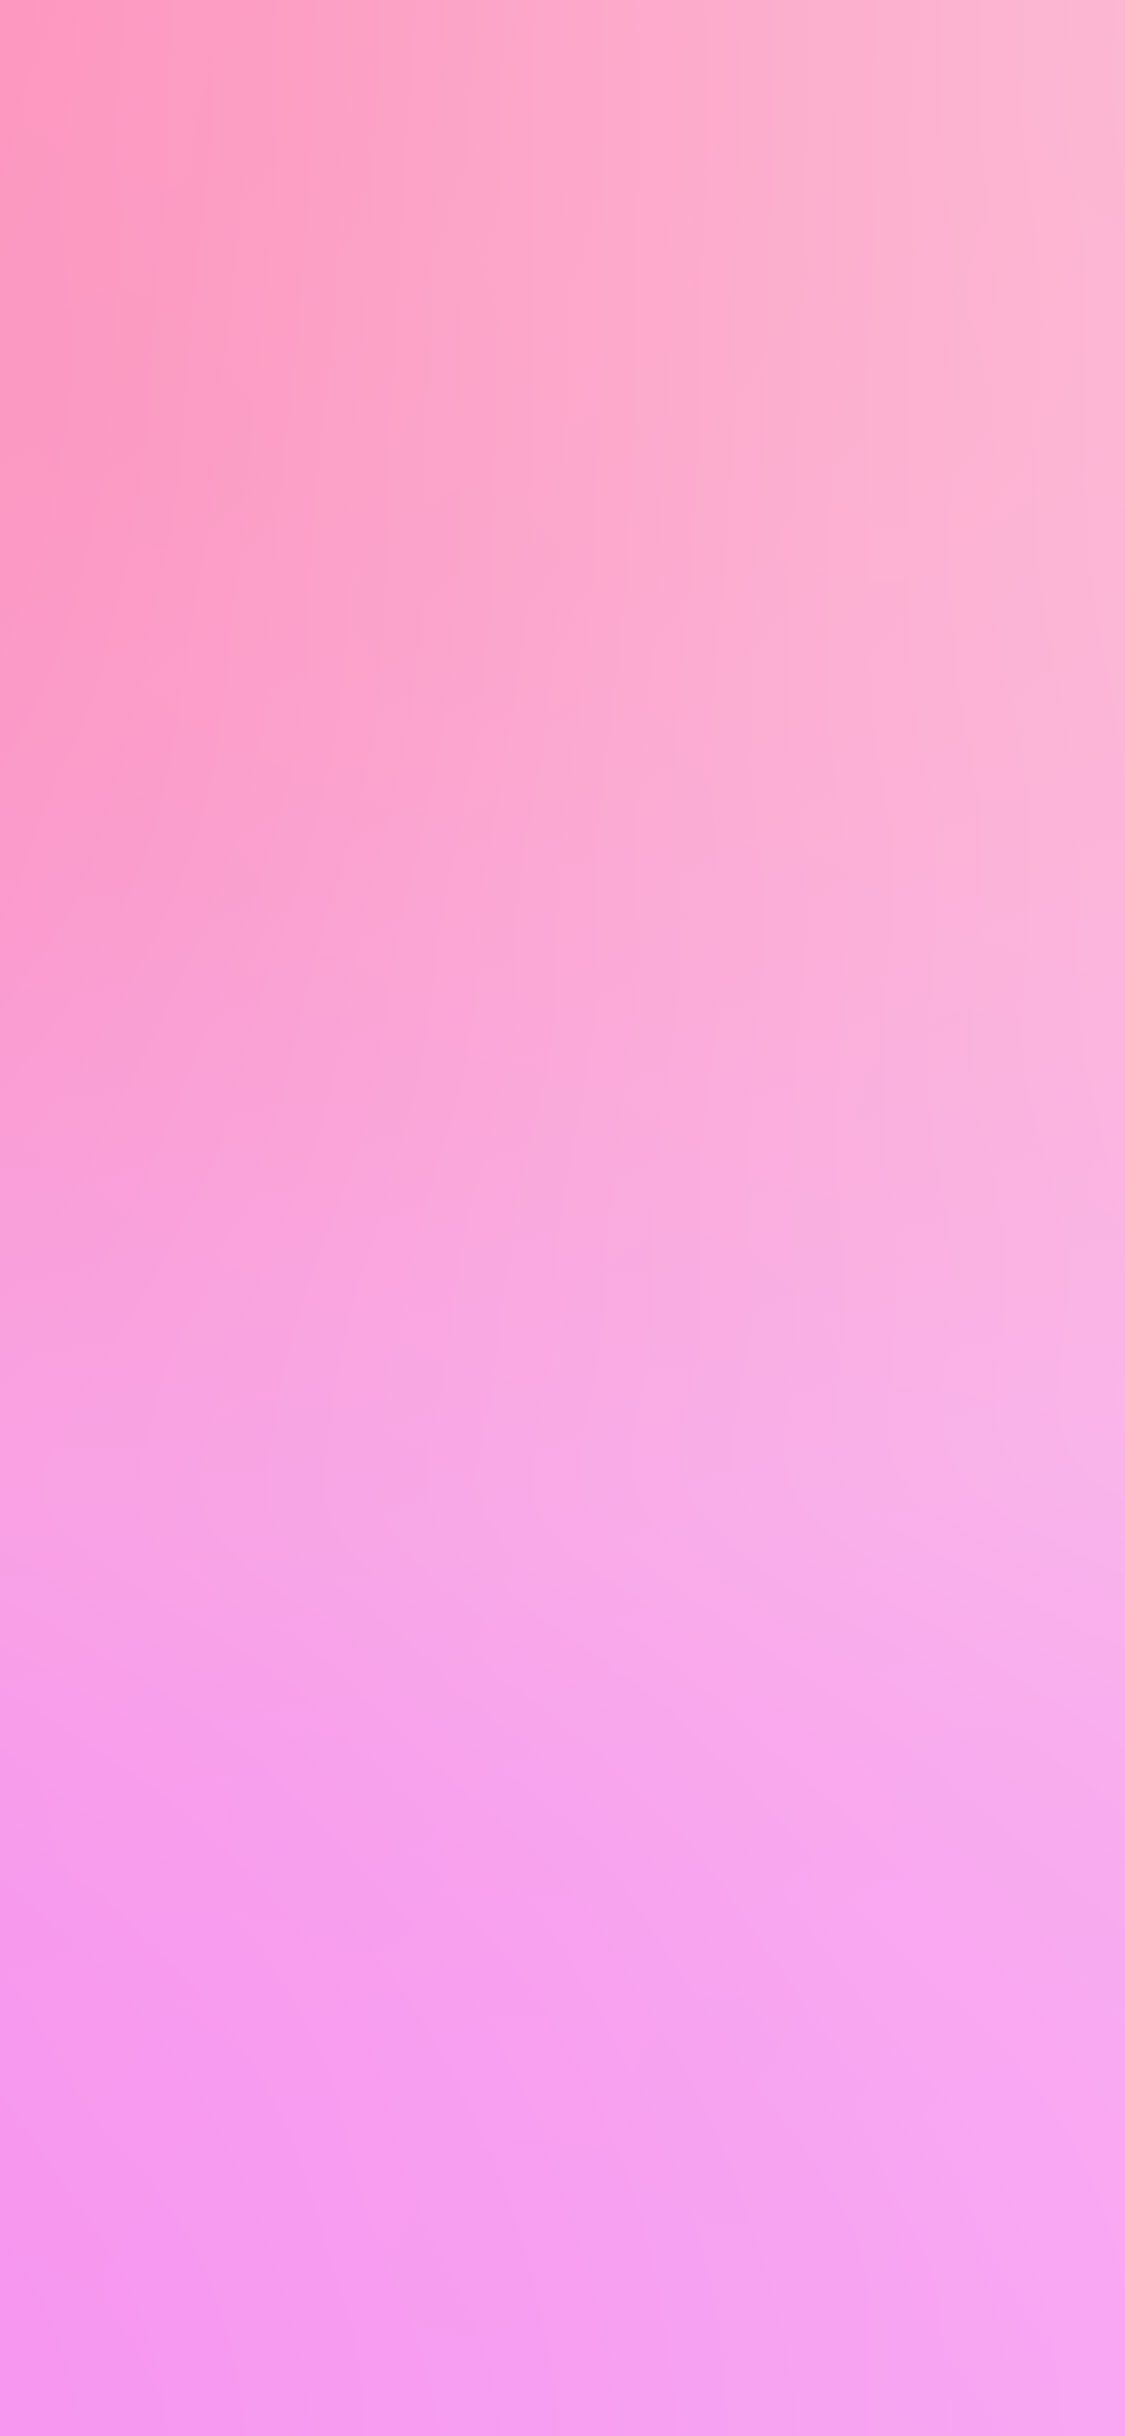 Purple Pink Pastel Soft Blur Gradationiphonexpapers.com